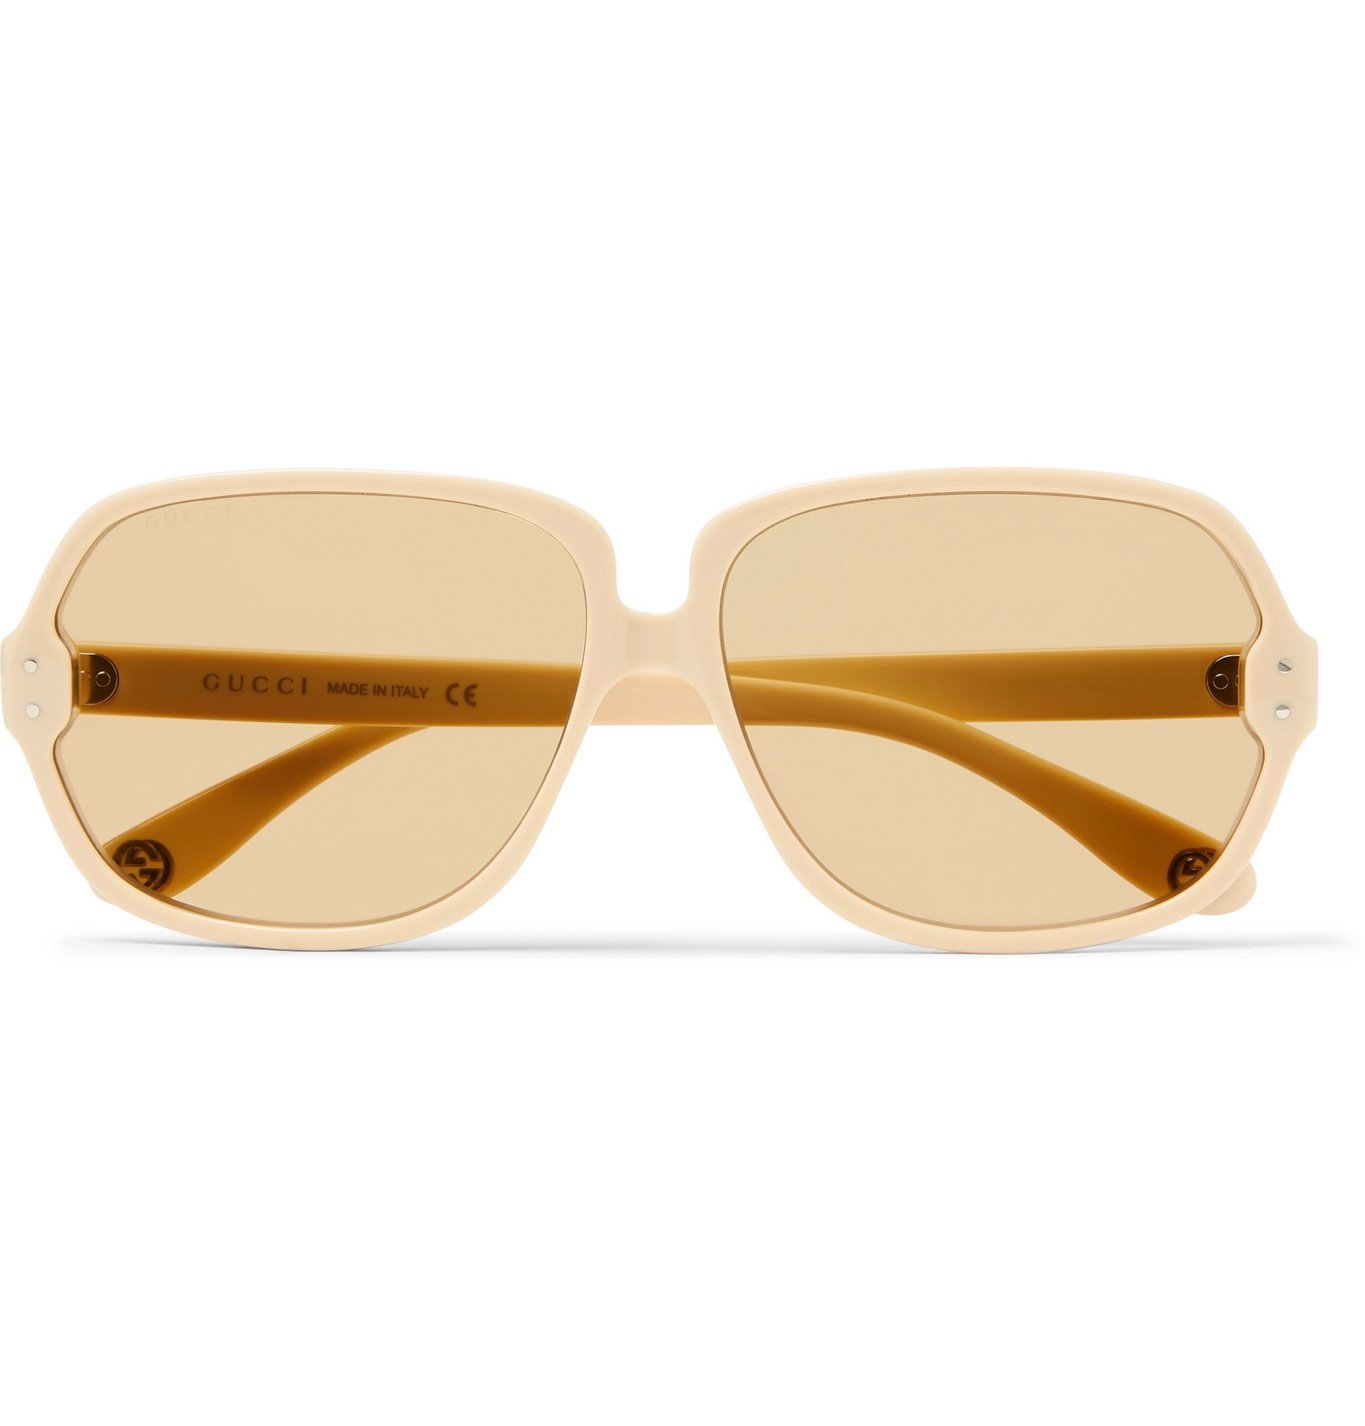 Gucci - Square-Frame Acetate Sunglasses 